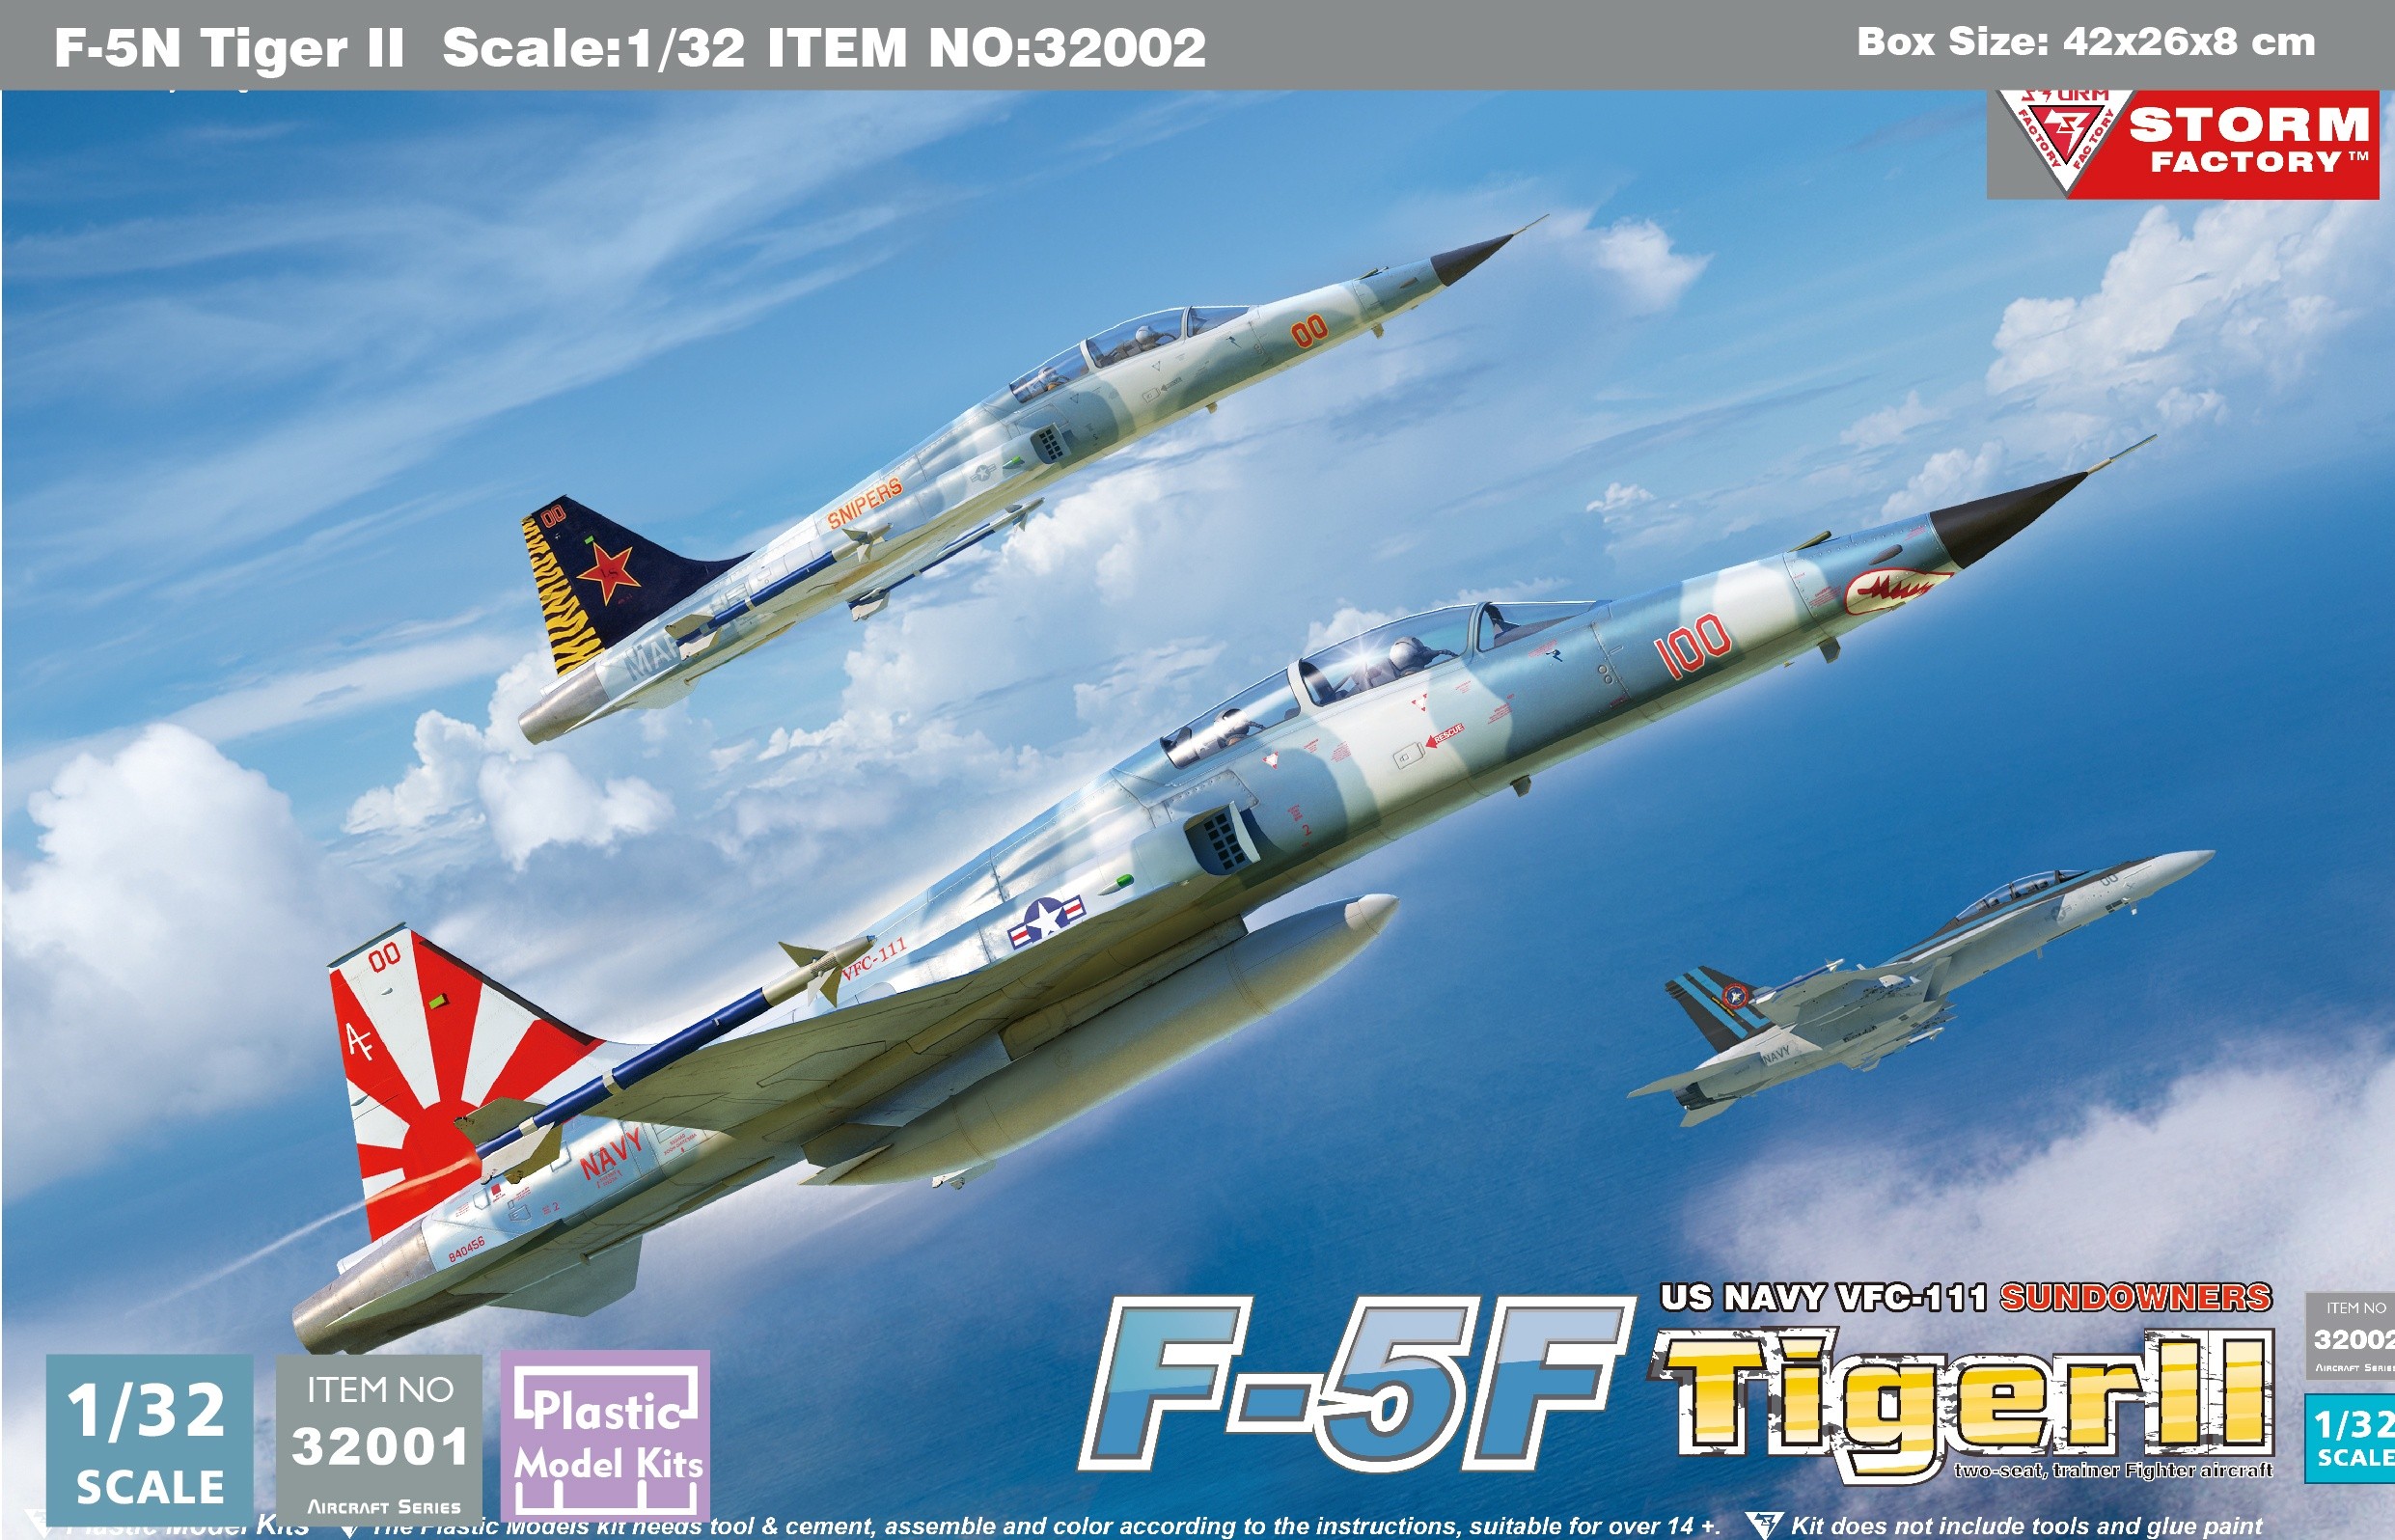 F-5F Tiger II Two-seat Trainer US Navy VFC-111 & USMC VMFT-401